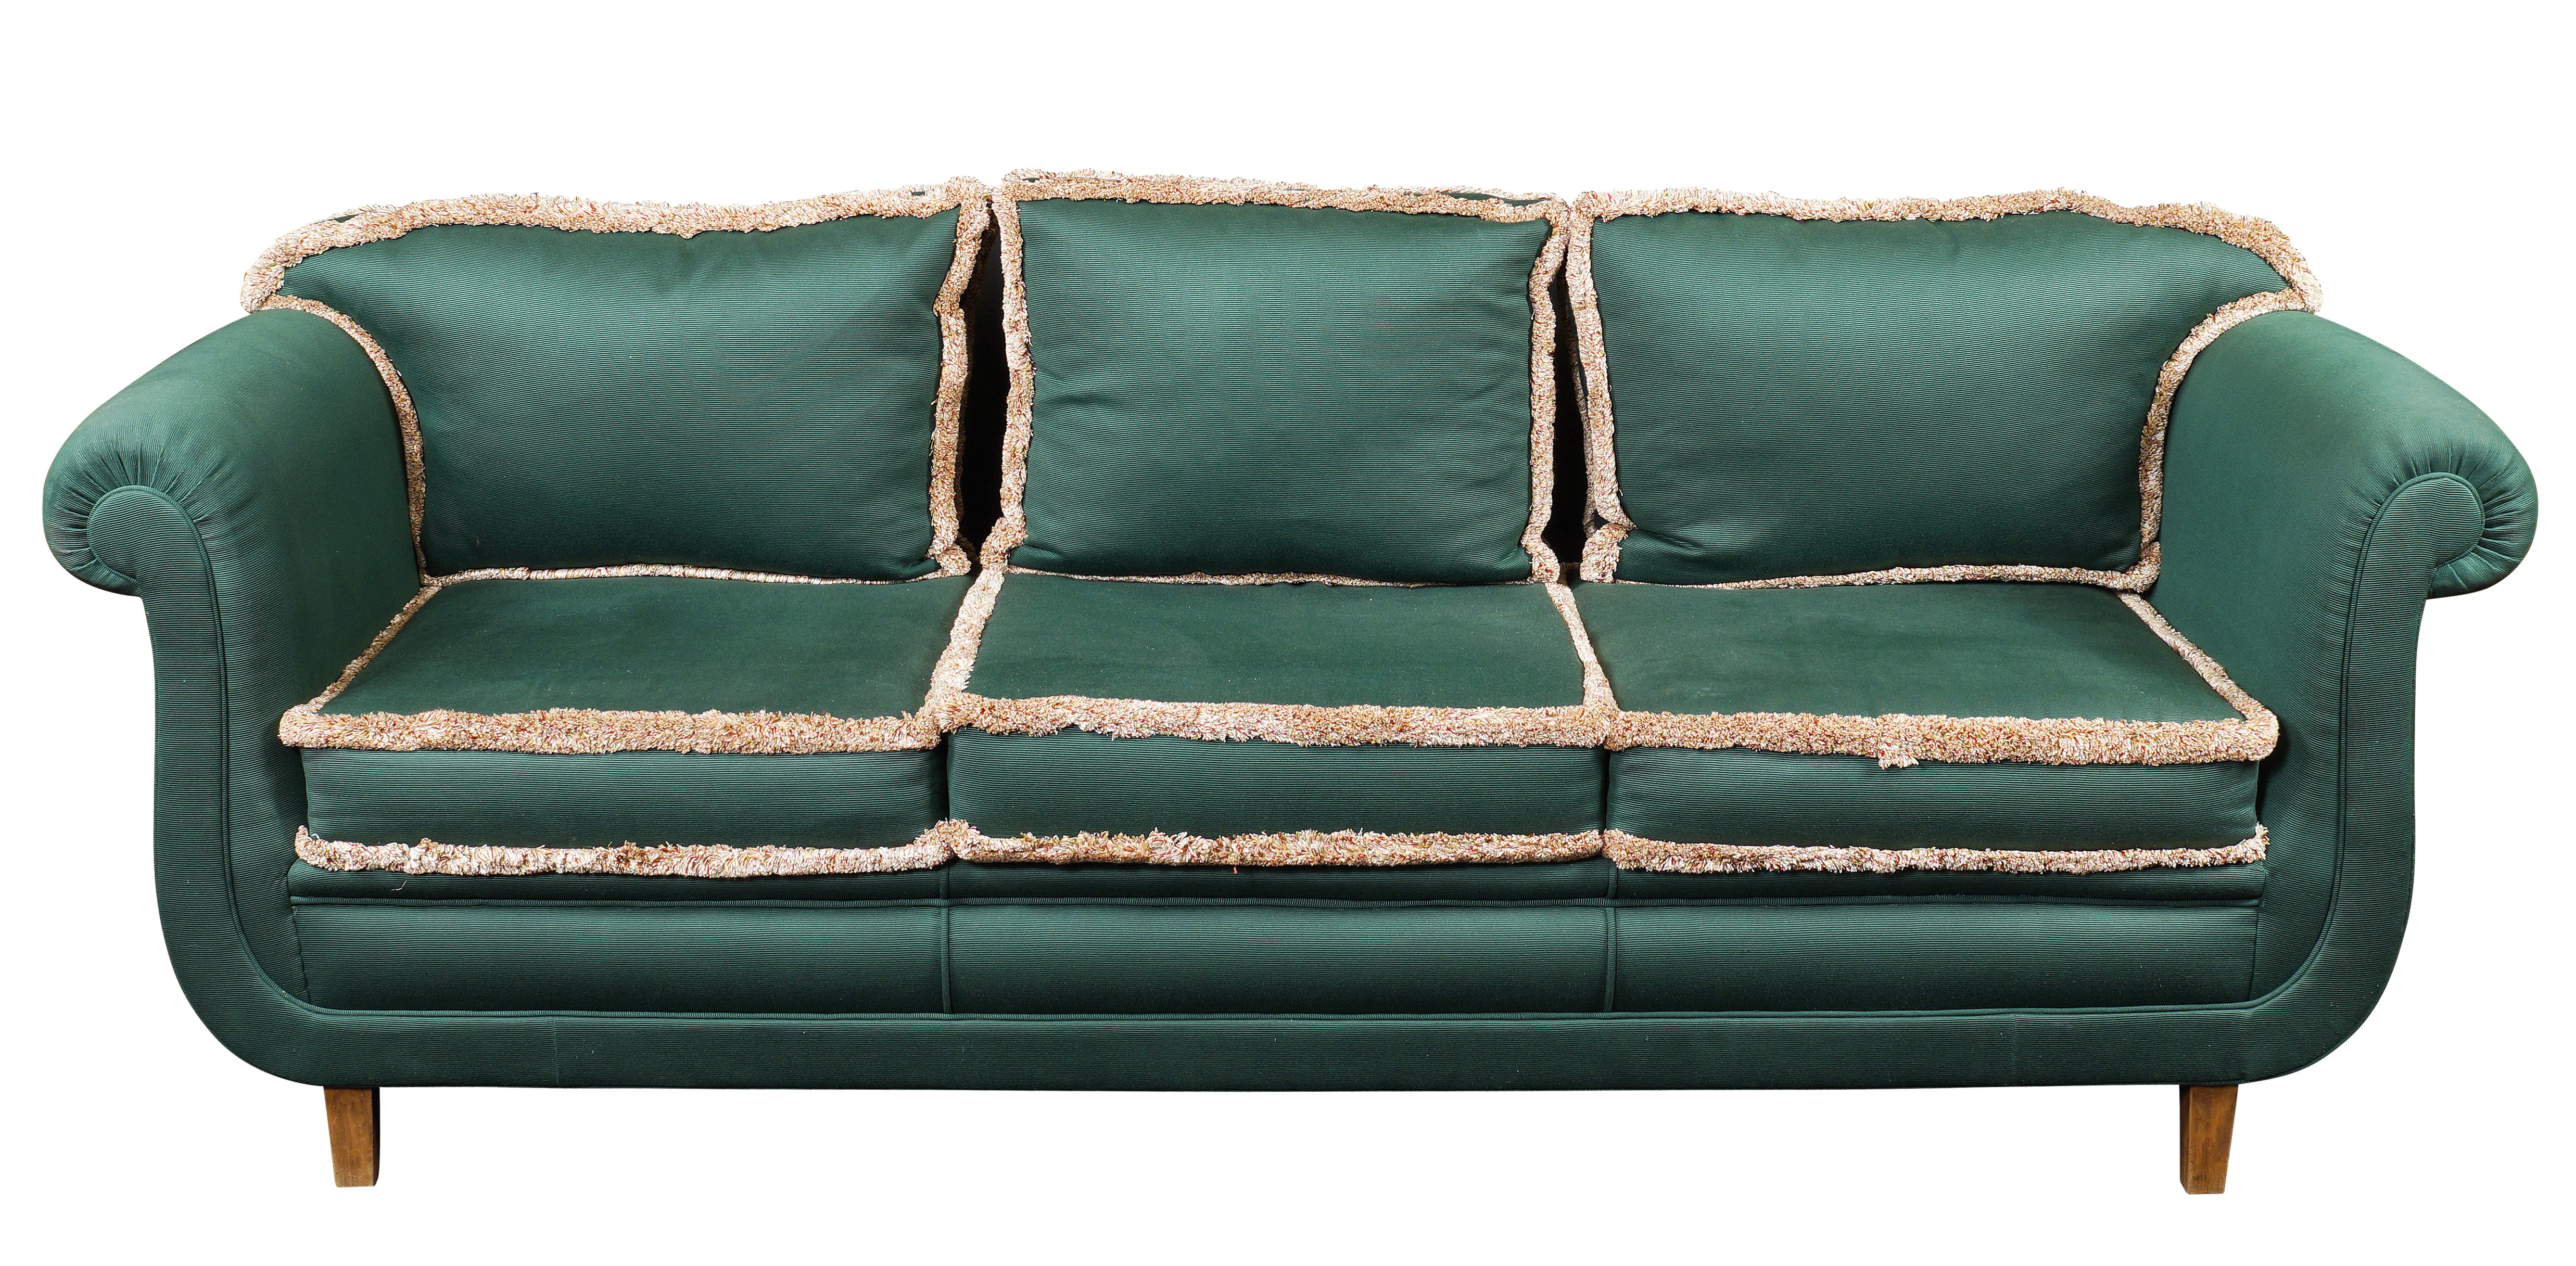 A three seater sofa 20th century 96x240x83 cm.